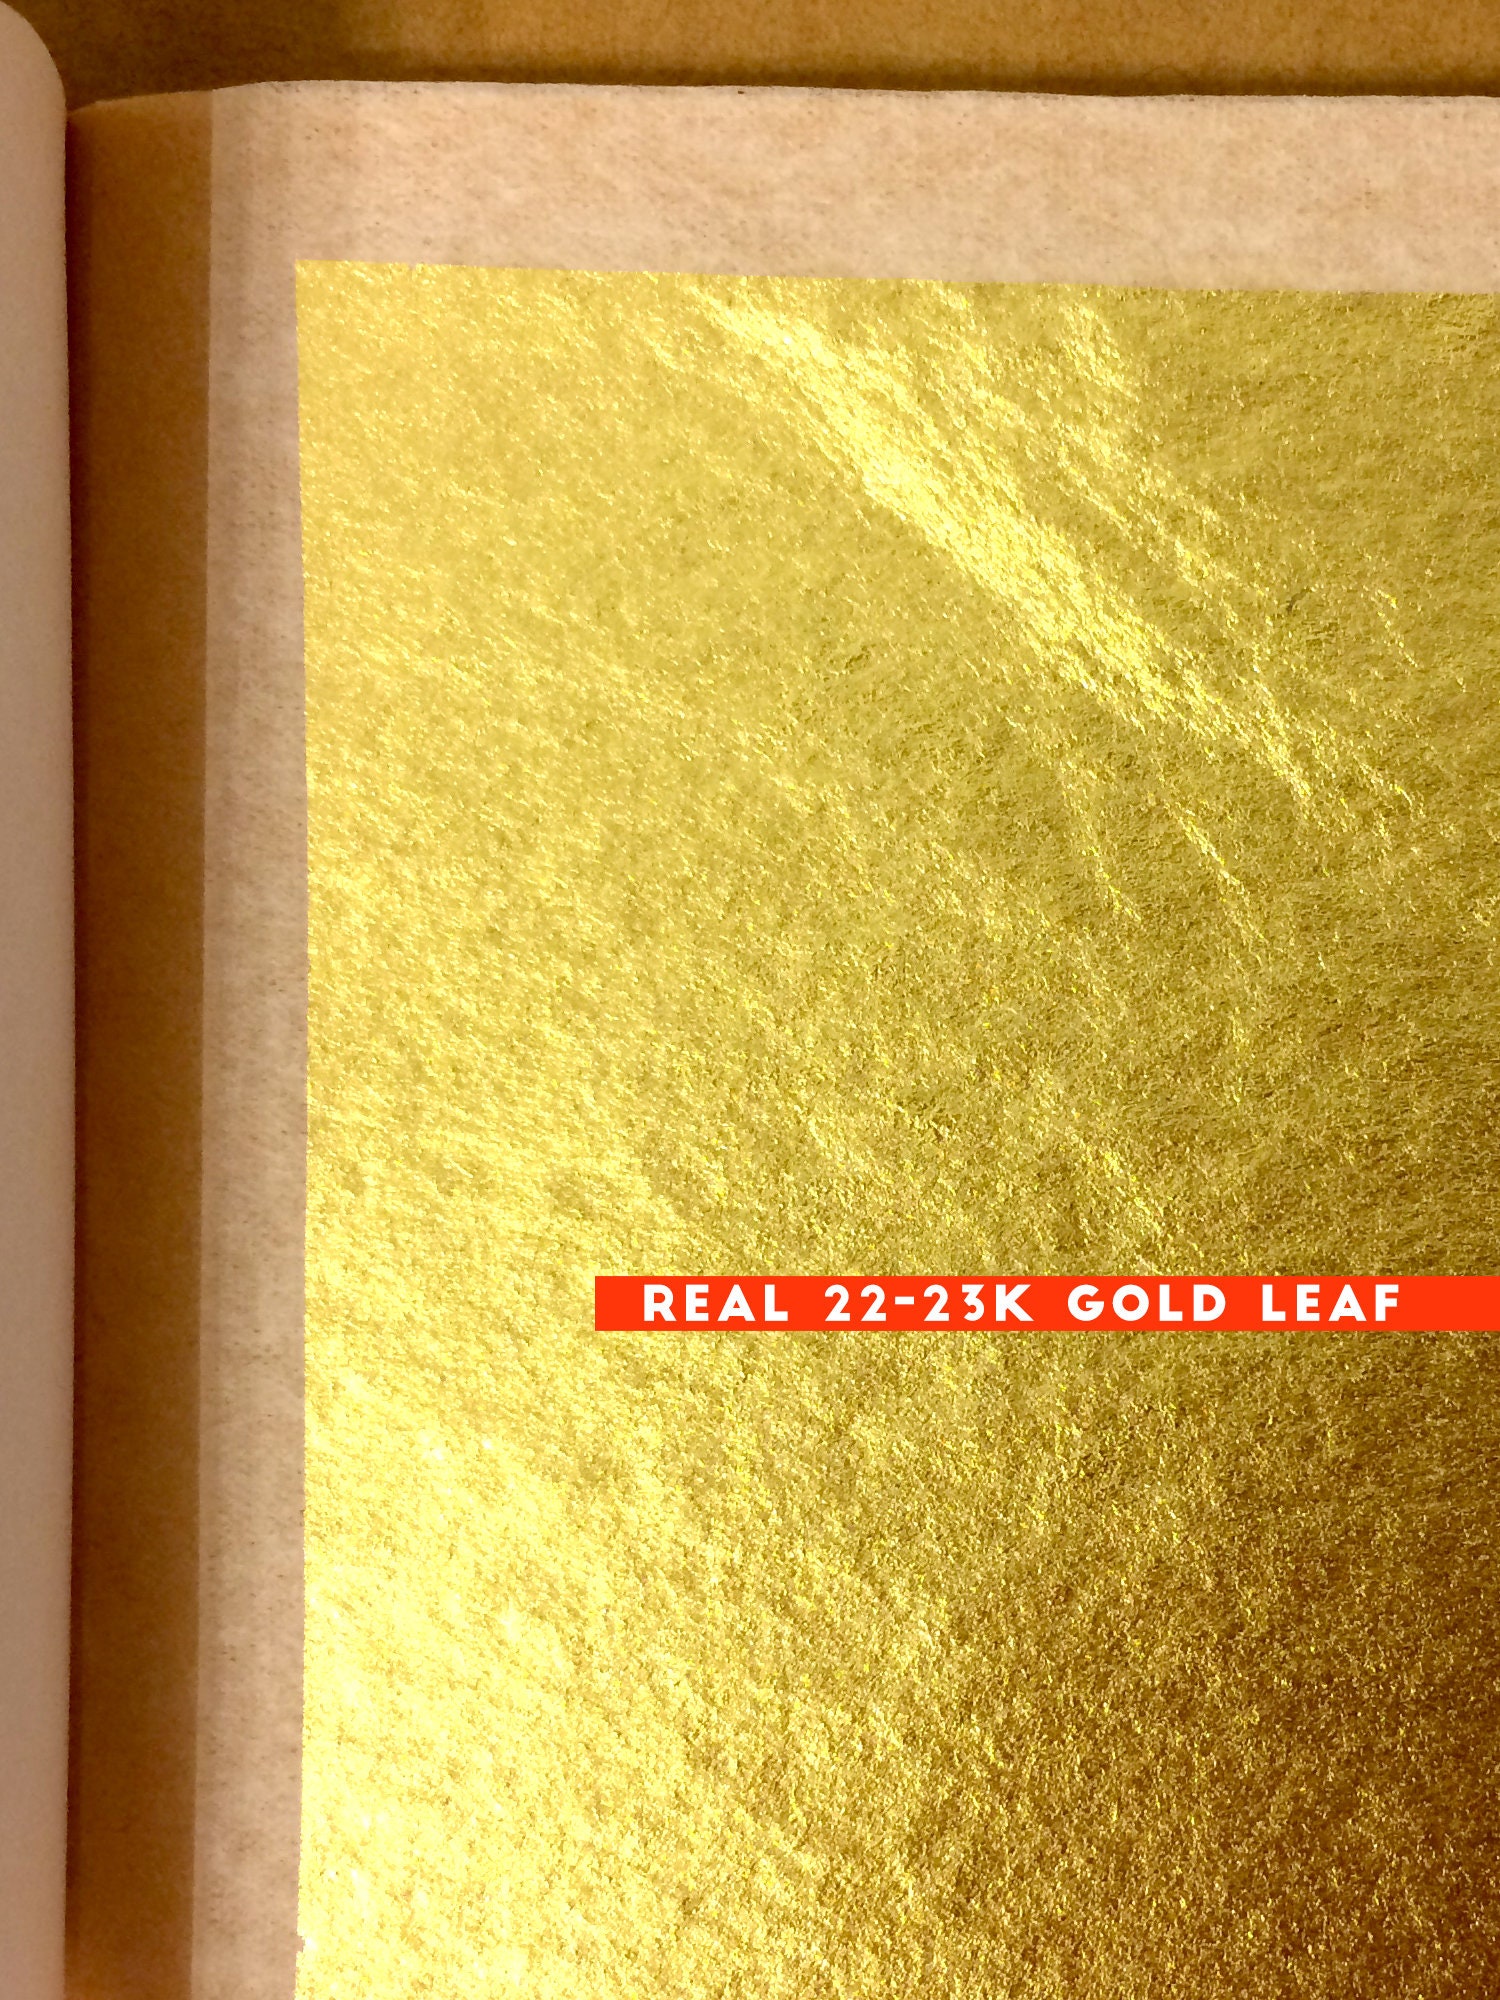 GOLD LEAF Rub 'n Buff Metallic Carnuba Wax Finish Repair Refinish